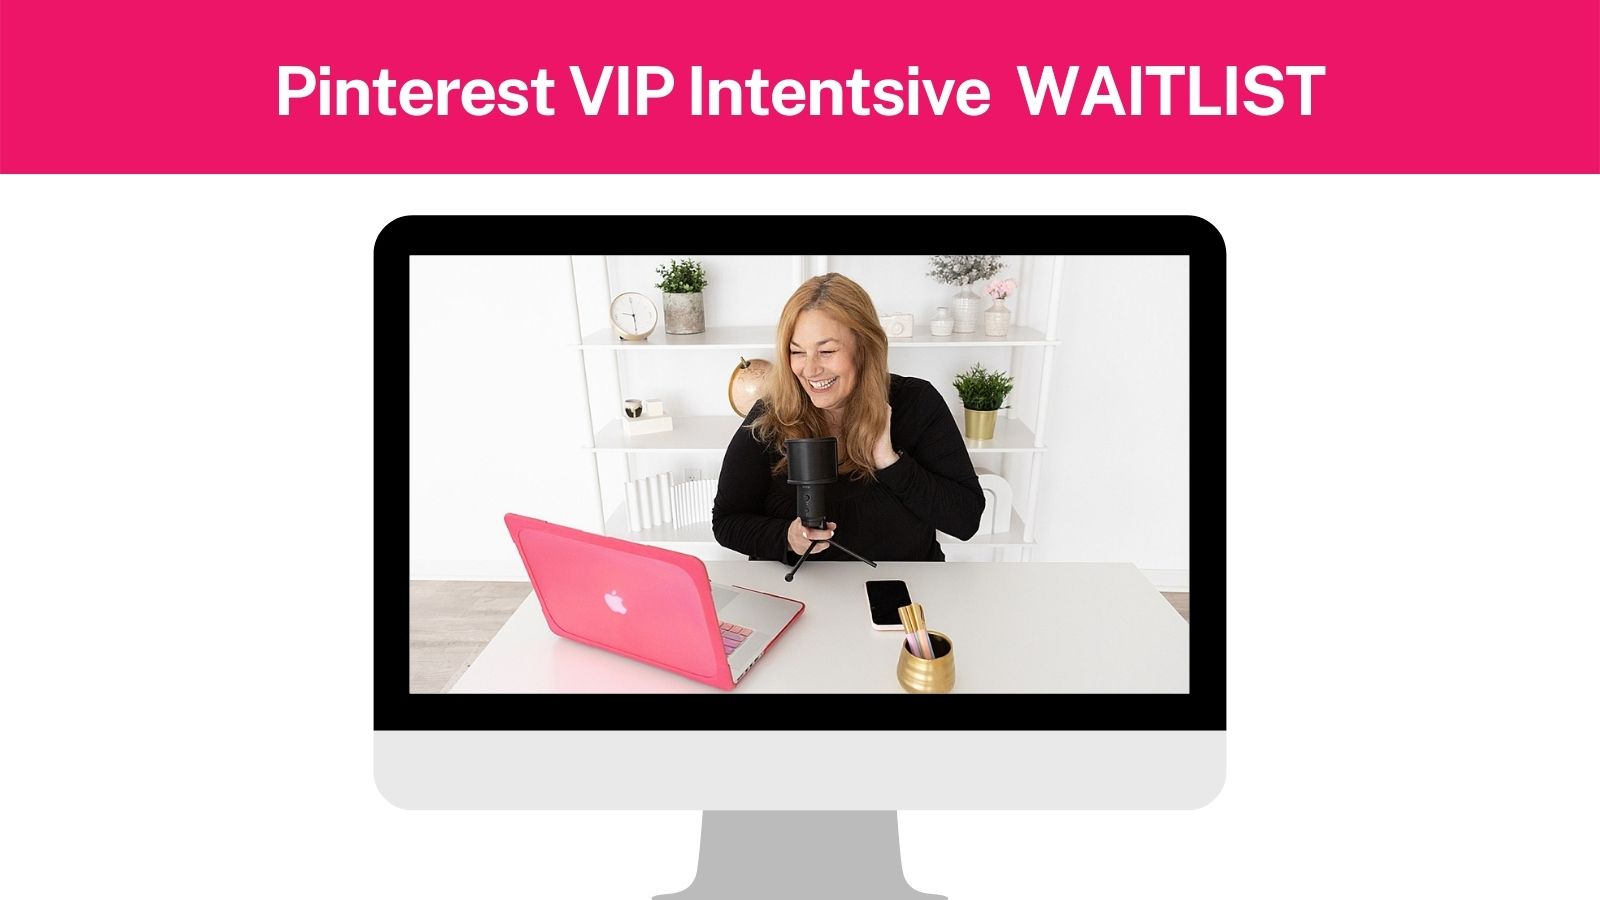 Pinterest VIP Intensive Waitlist